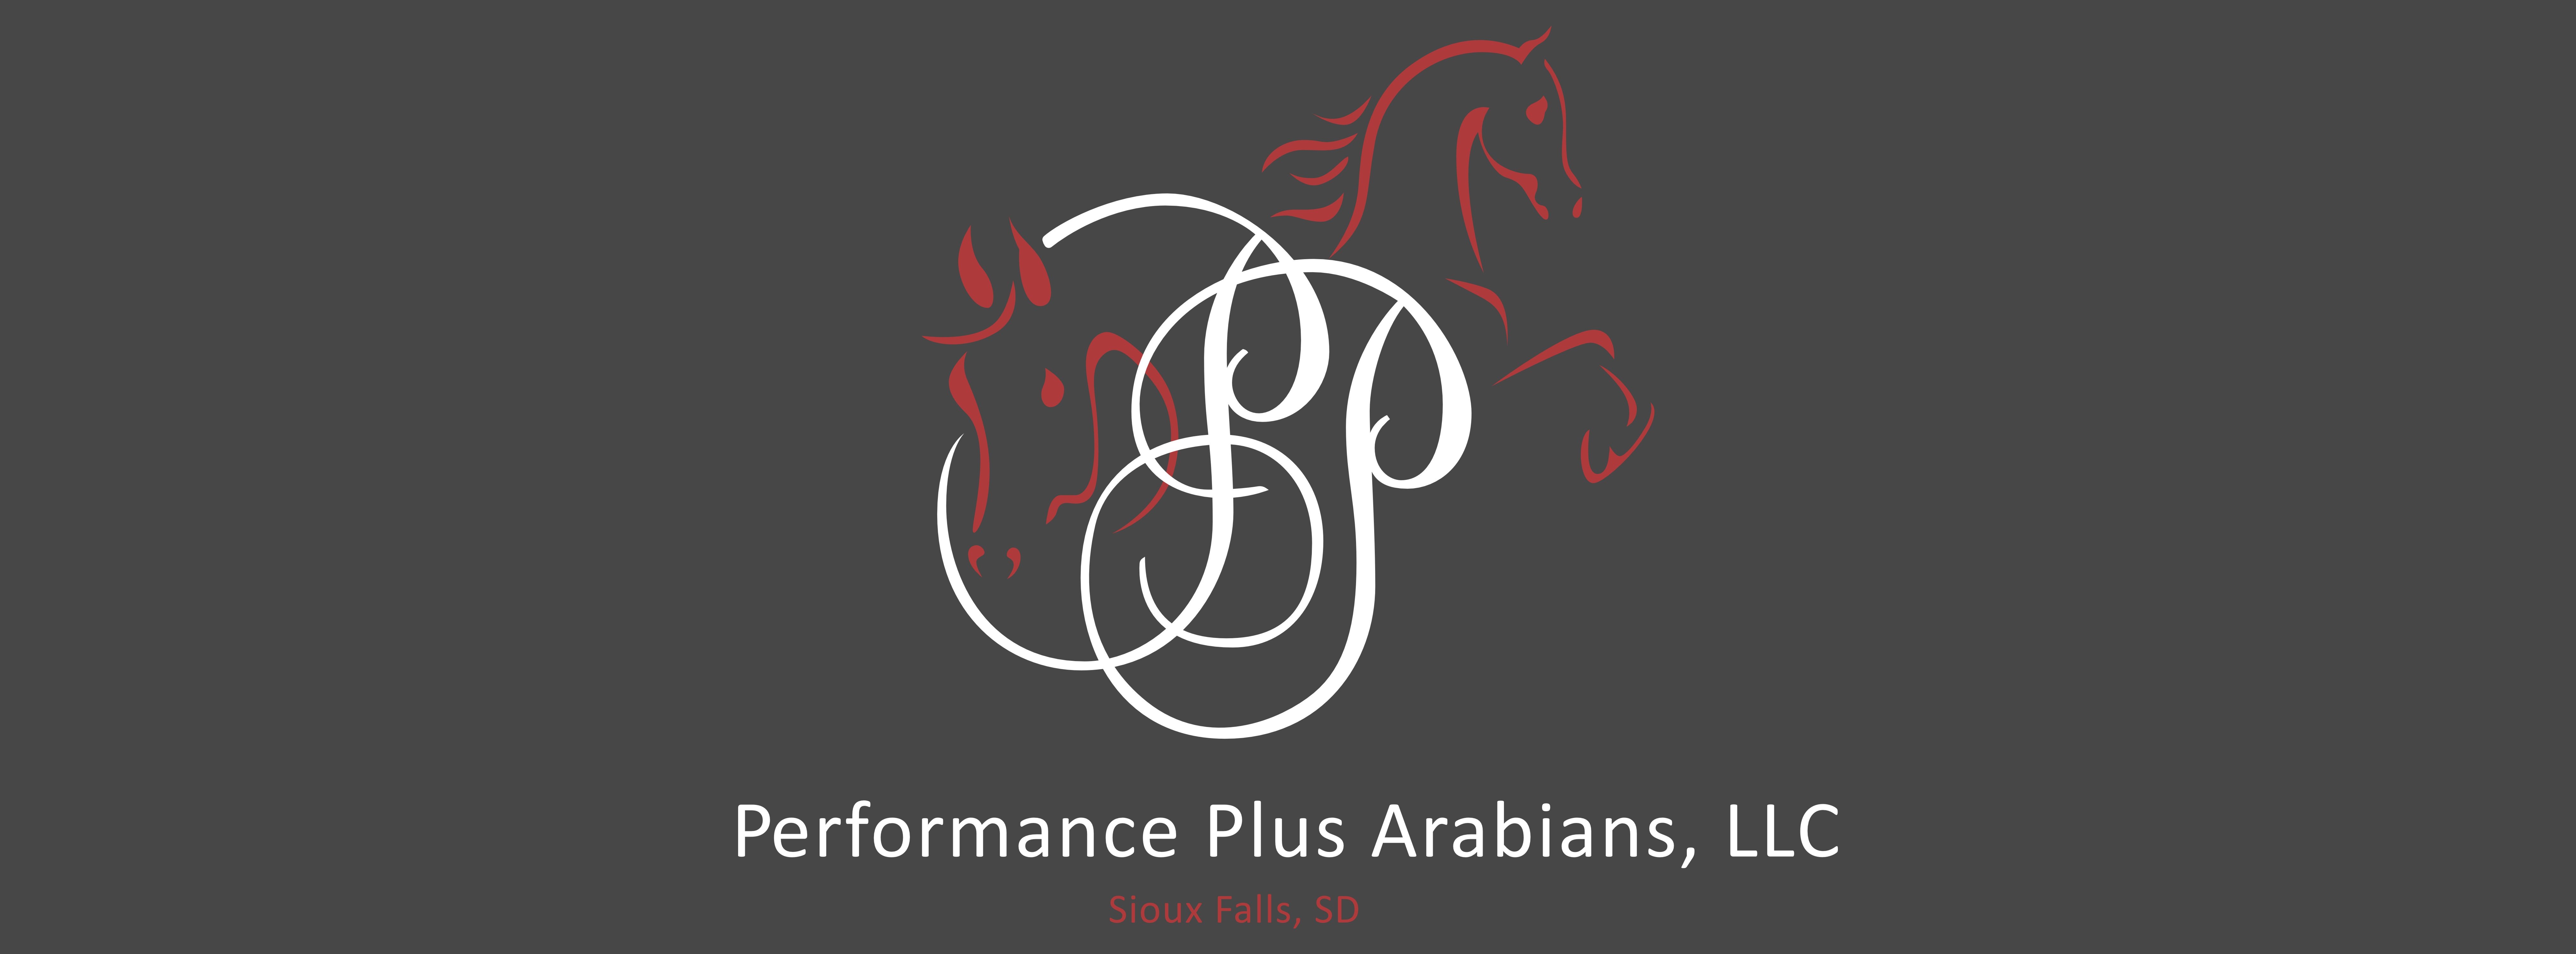 Performance Plus Arabians